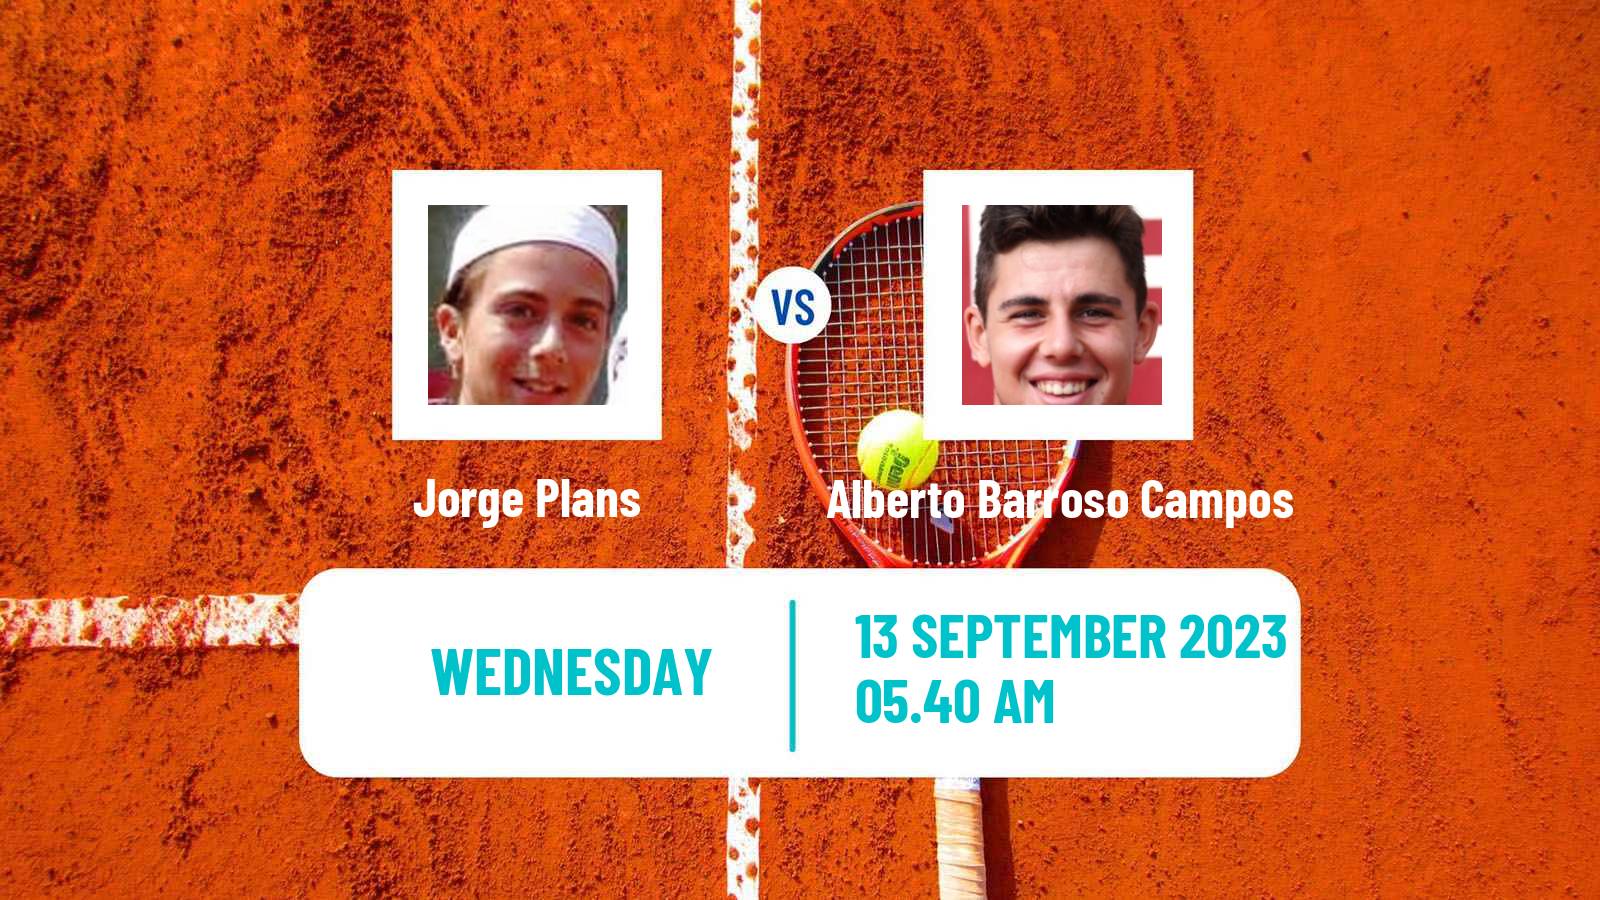 Tennis ITF M25 Madrid Men Jorge Plans - Alberto Barroso Campos